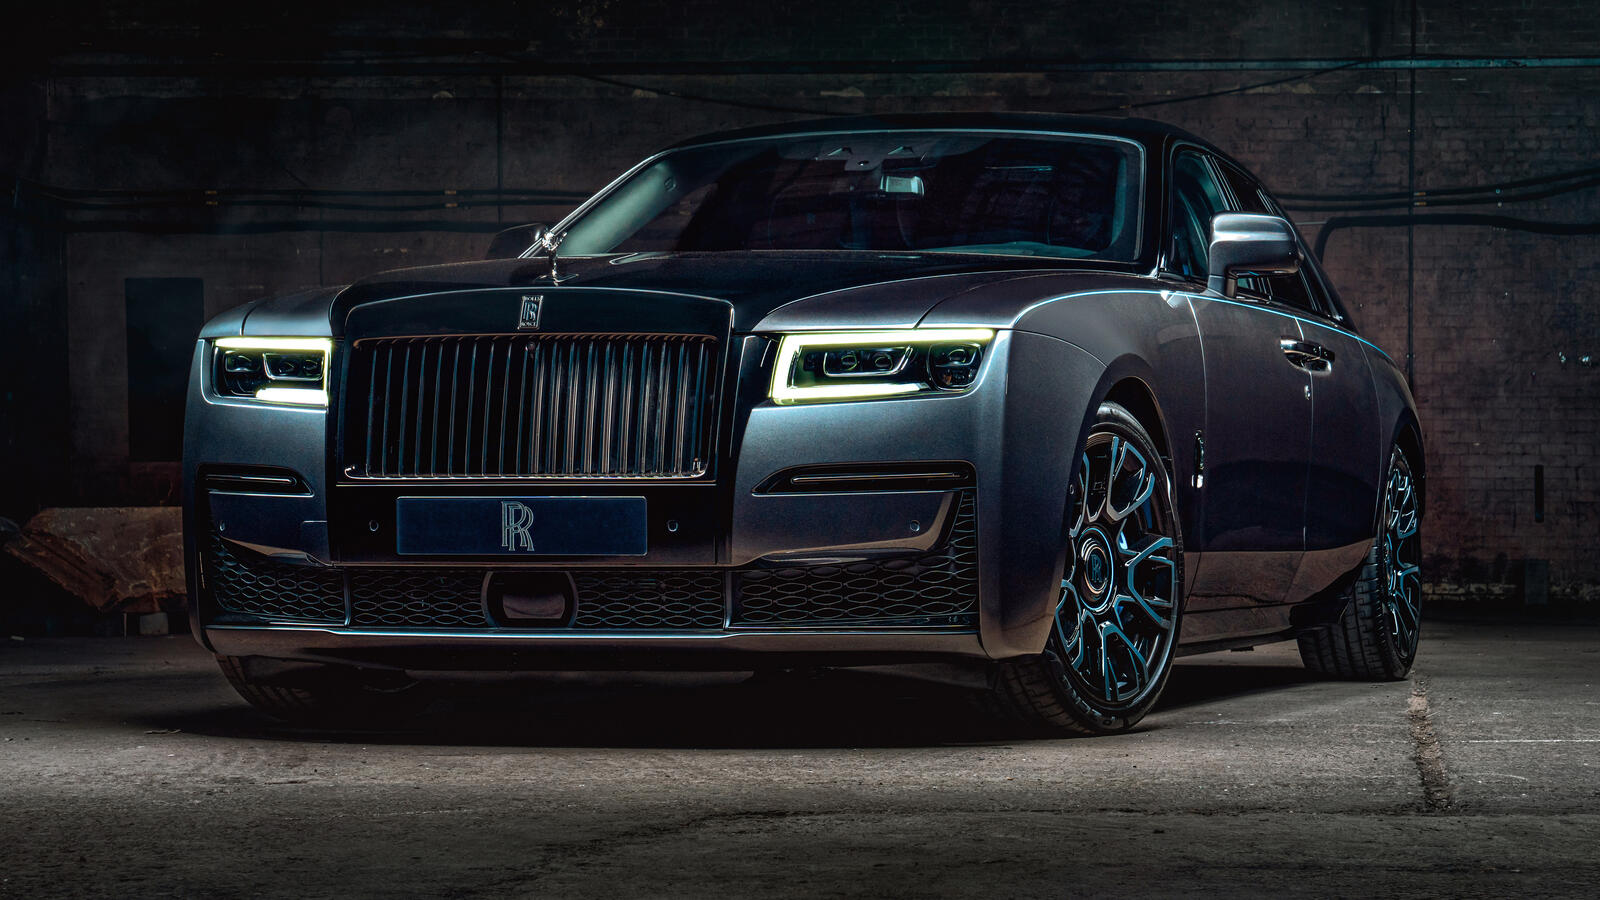 Free photo Rolls Royce Ghost Black Badge 2021 in a brick garage